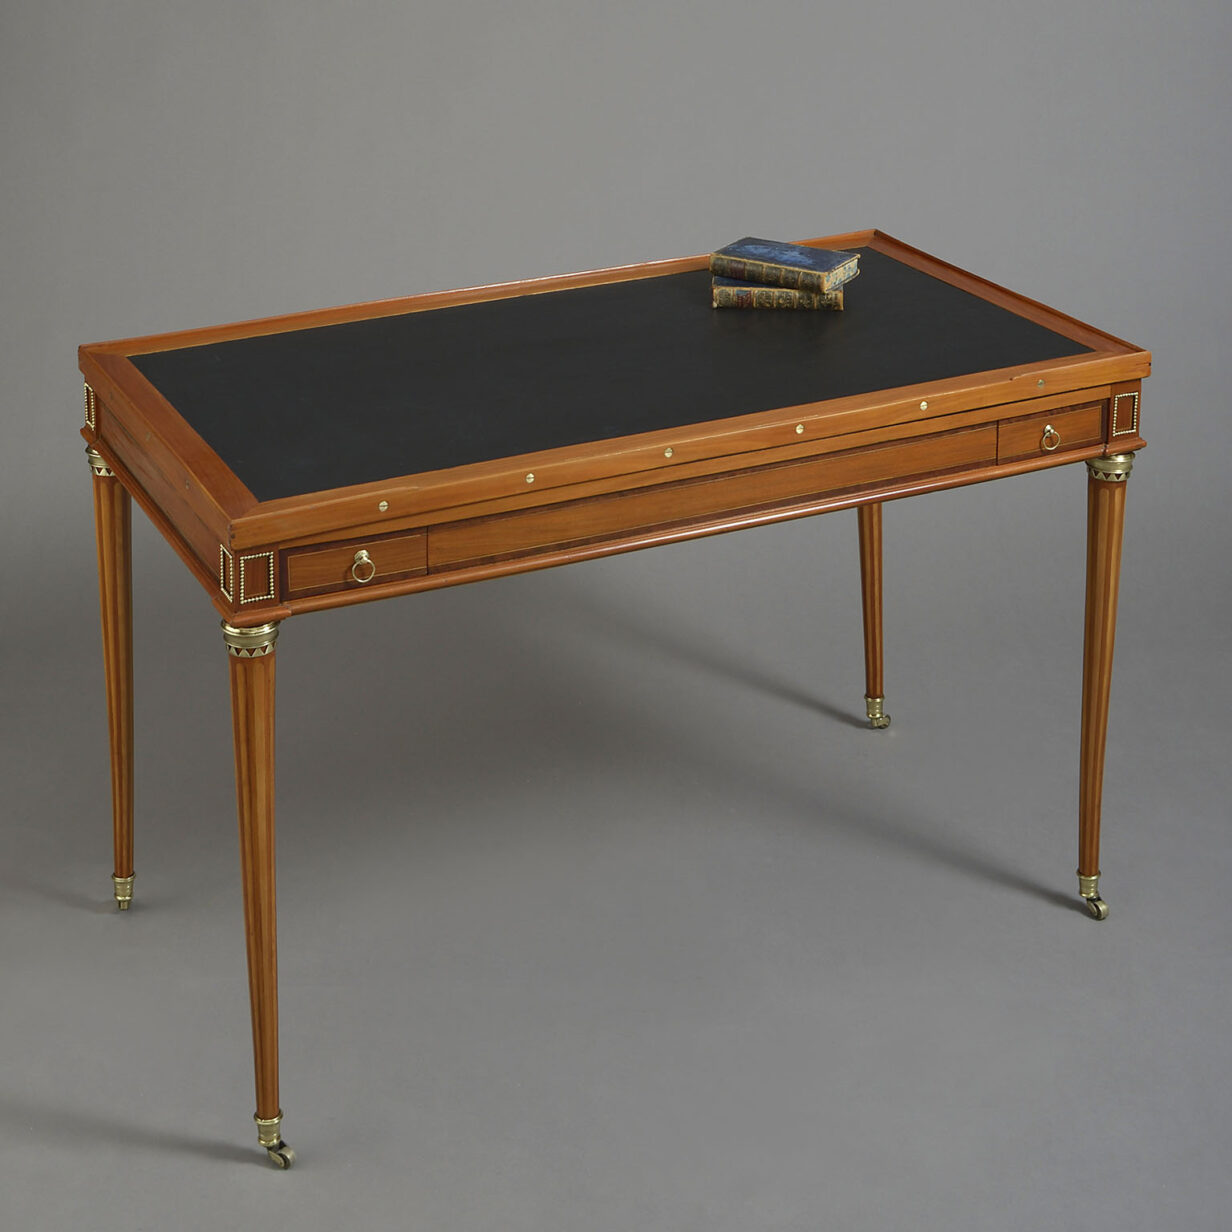 A late 18th century louis xvi period tric trac table by saunier